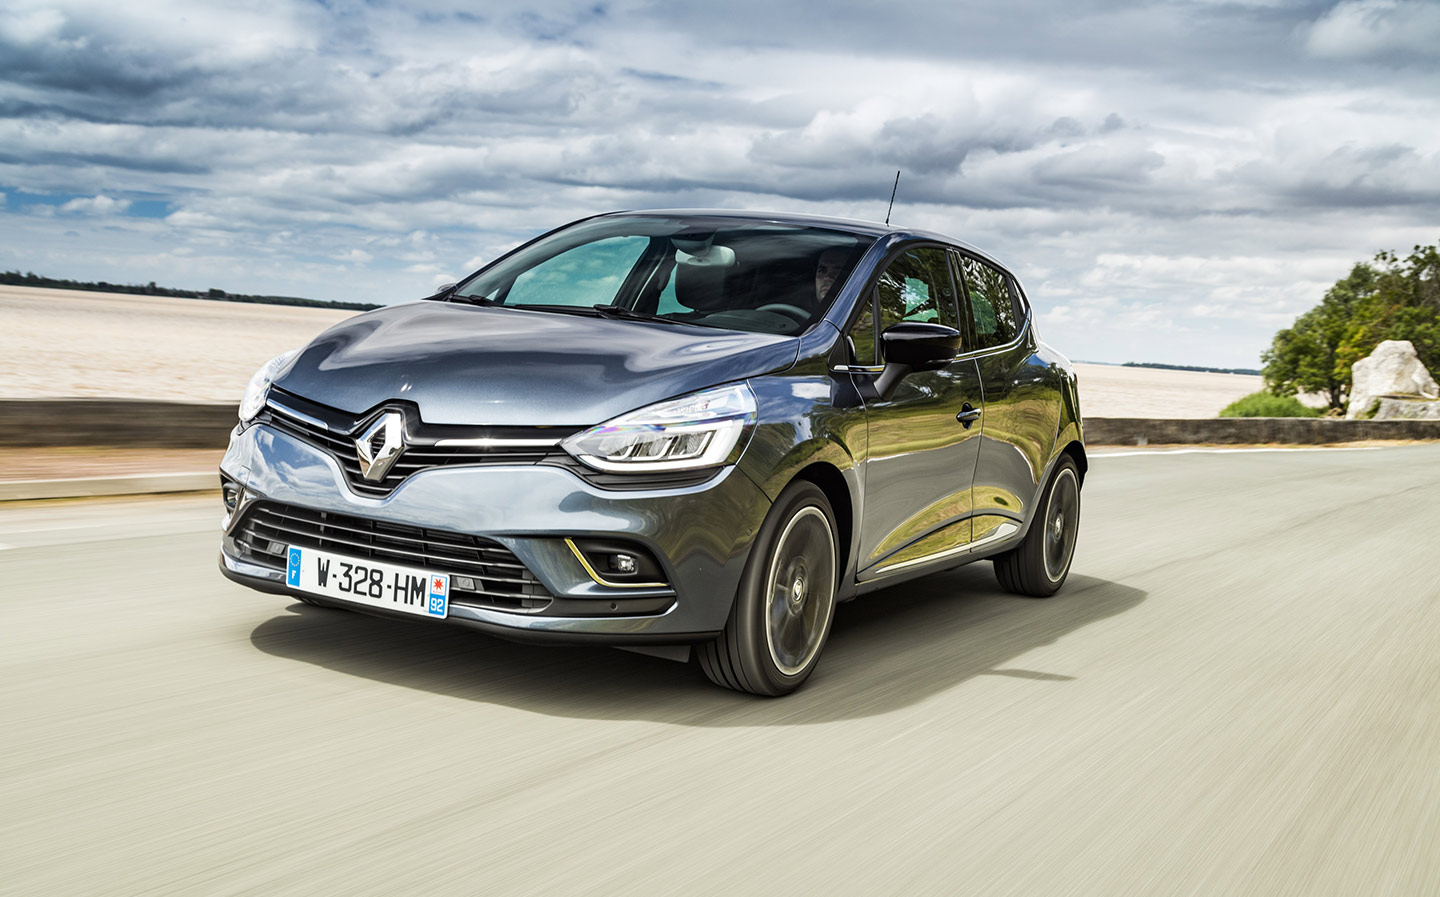 Renault Clio Mk 4 review (2013-2019)